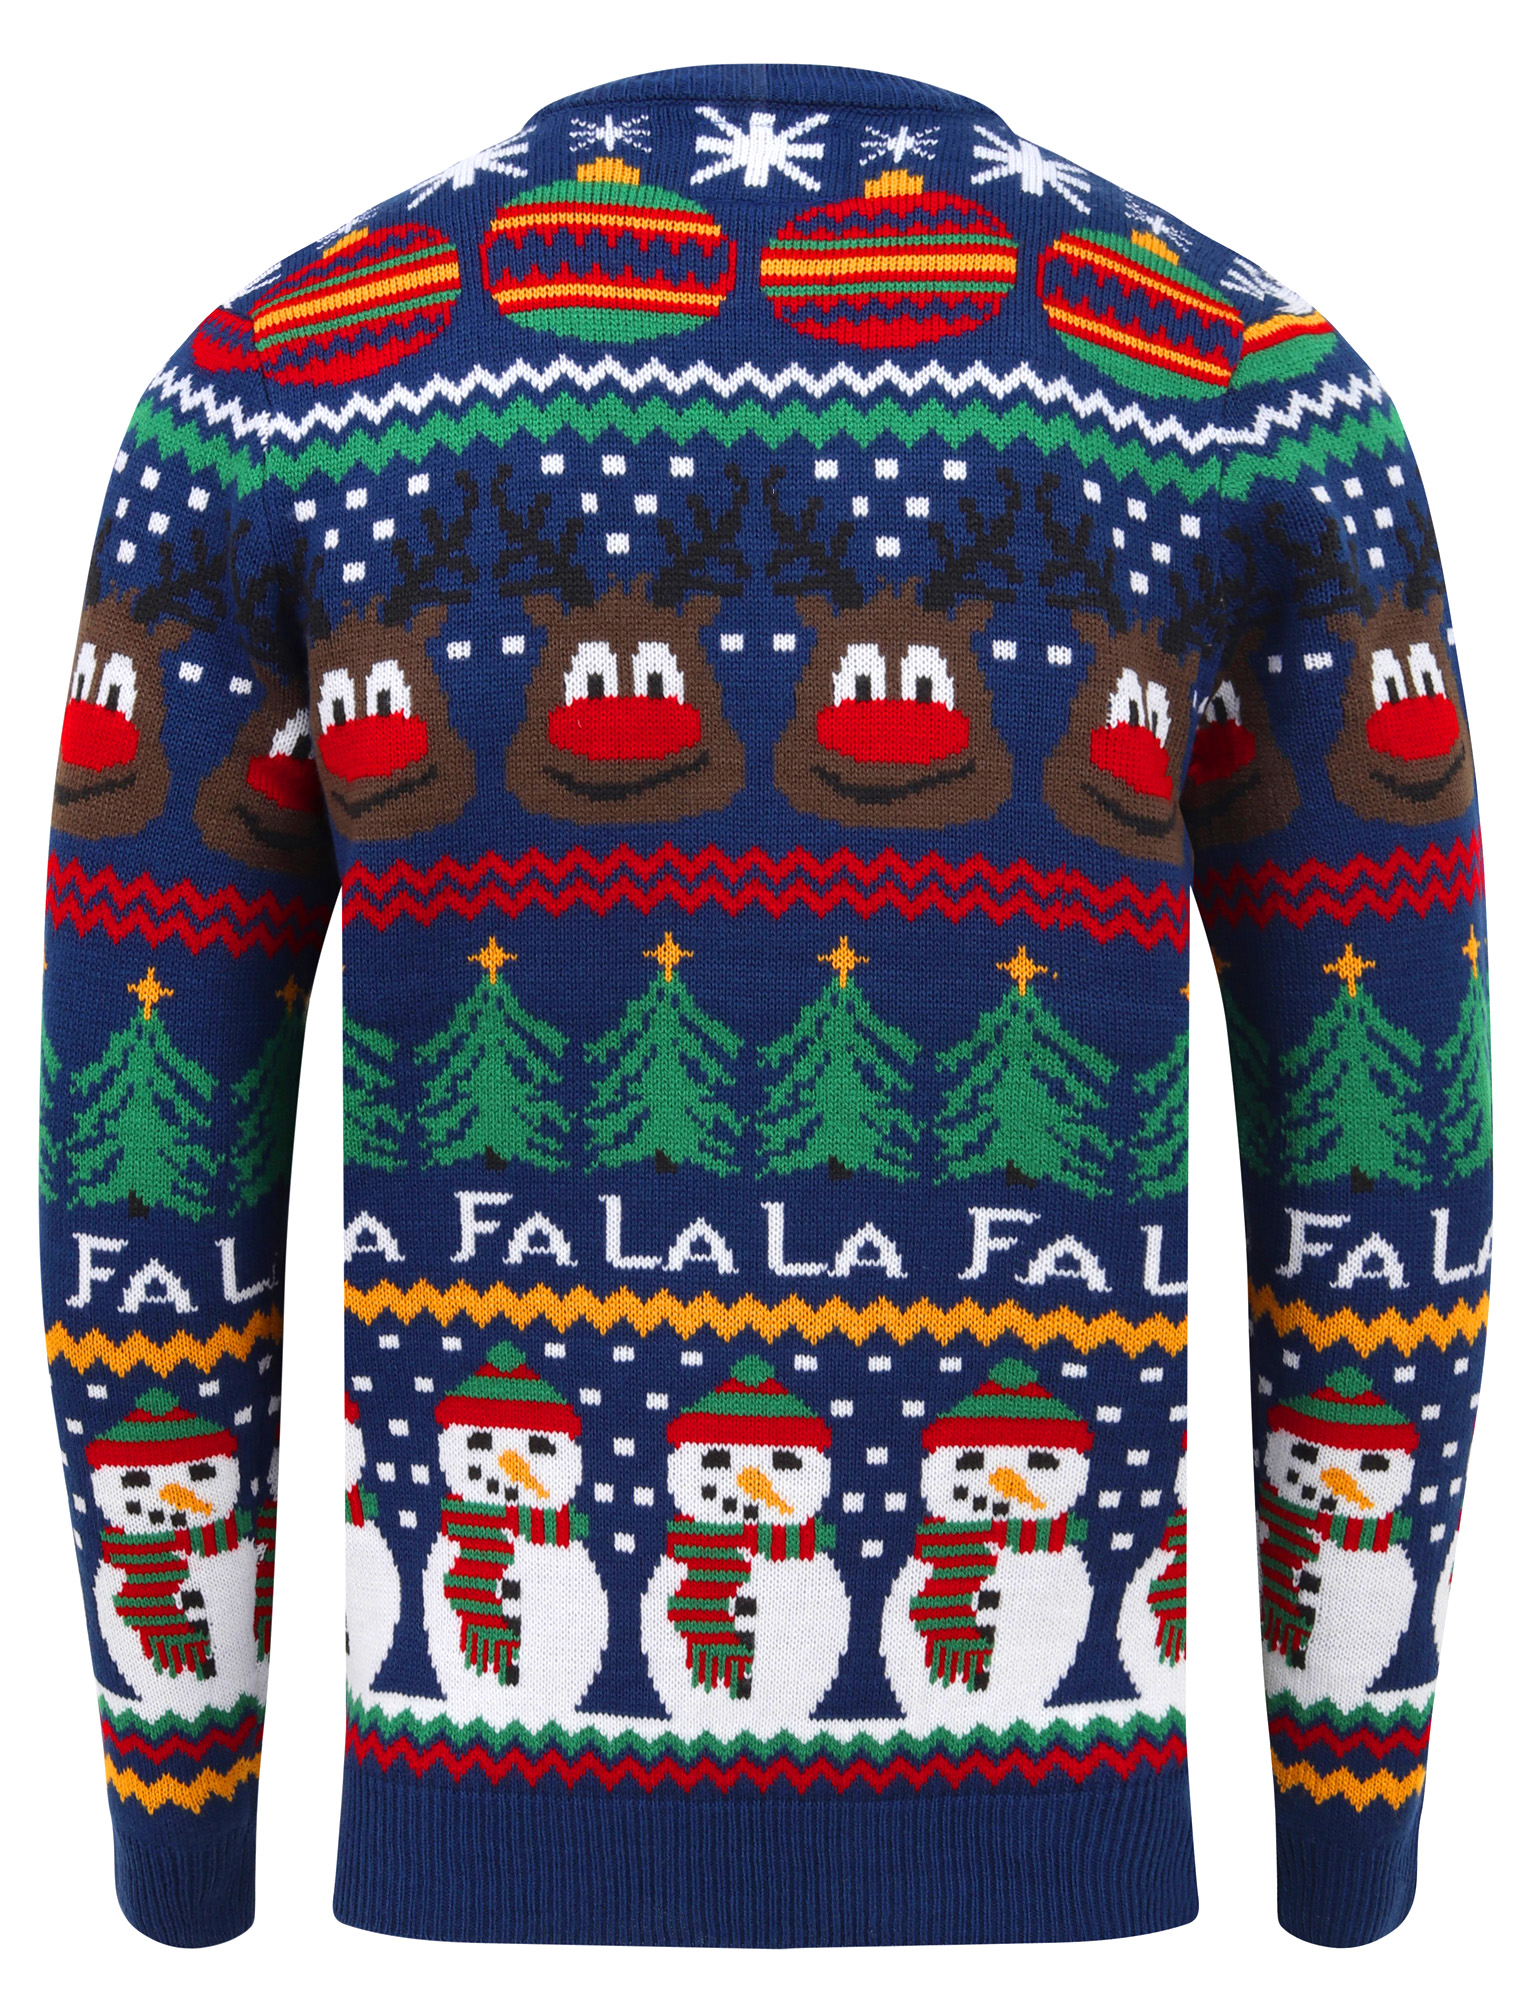 Christmas Jumper Men S Light Up Led Xmas Reindeer Snowman Fairisle Sweater Top Ebay